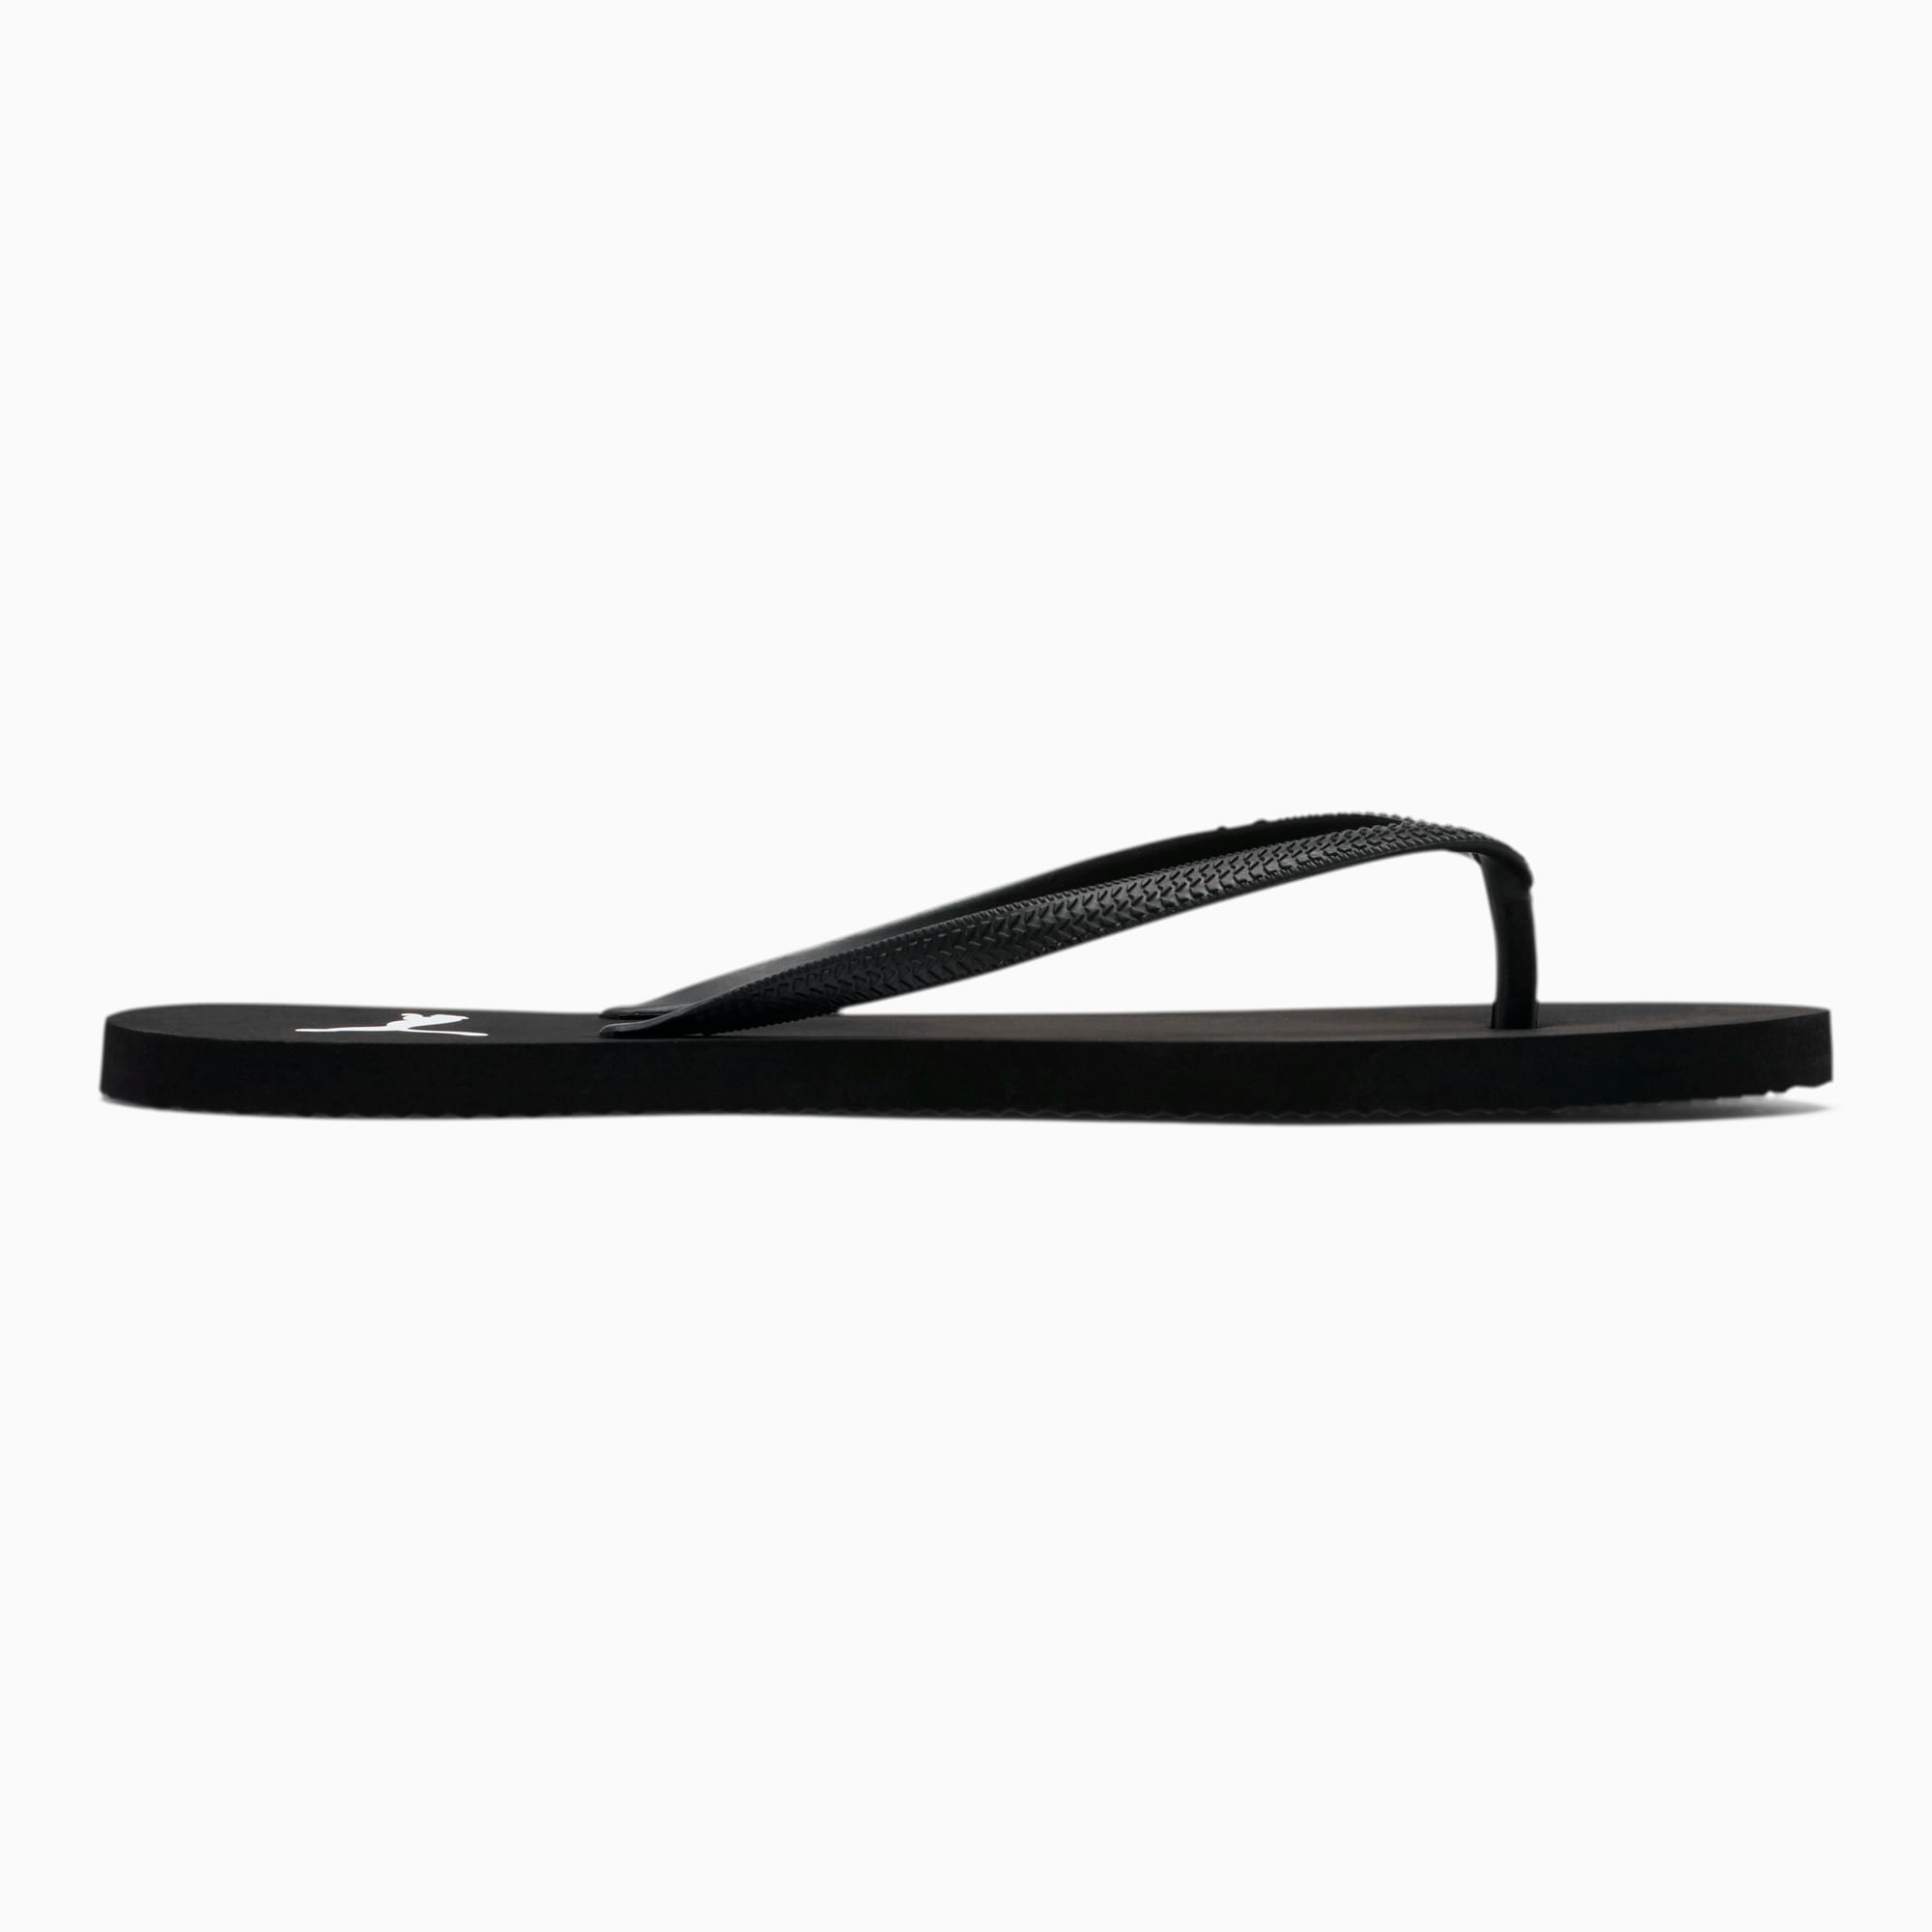 puma women's basic flip flop sandal